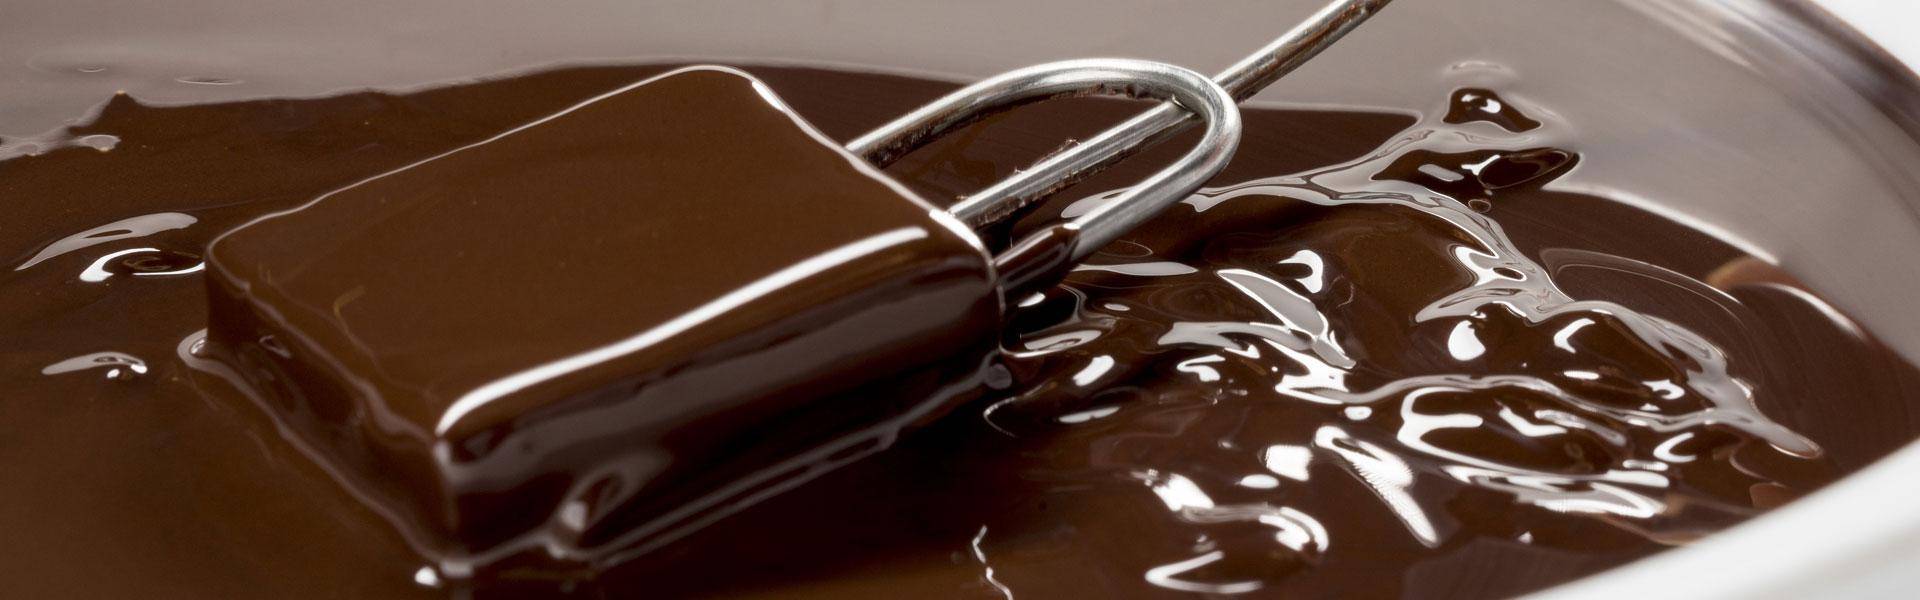 dark chocolate bonbon coated